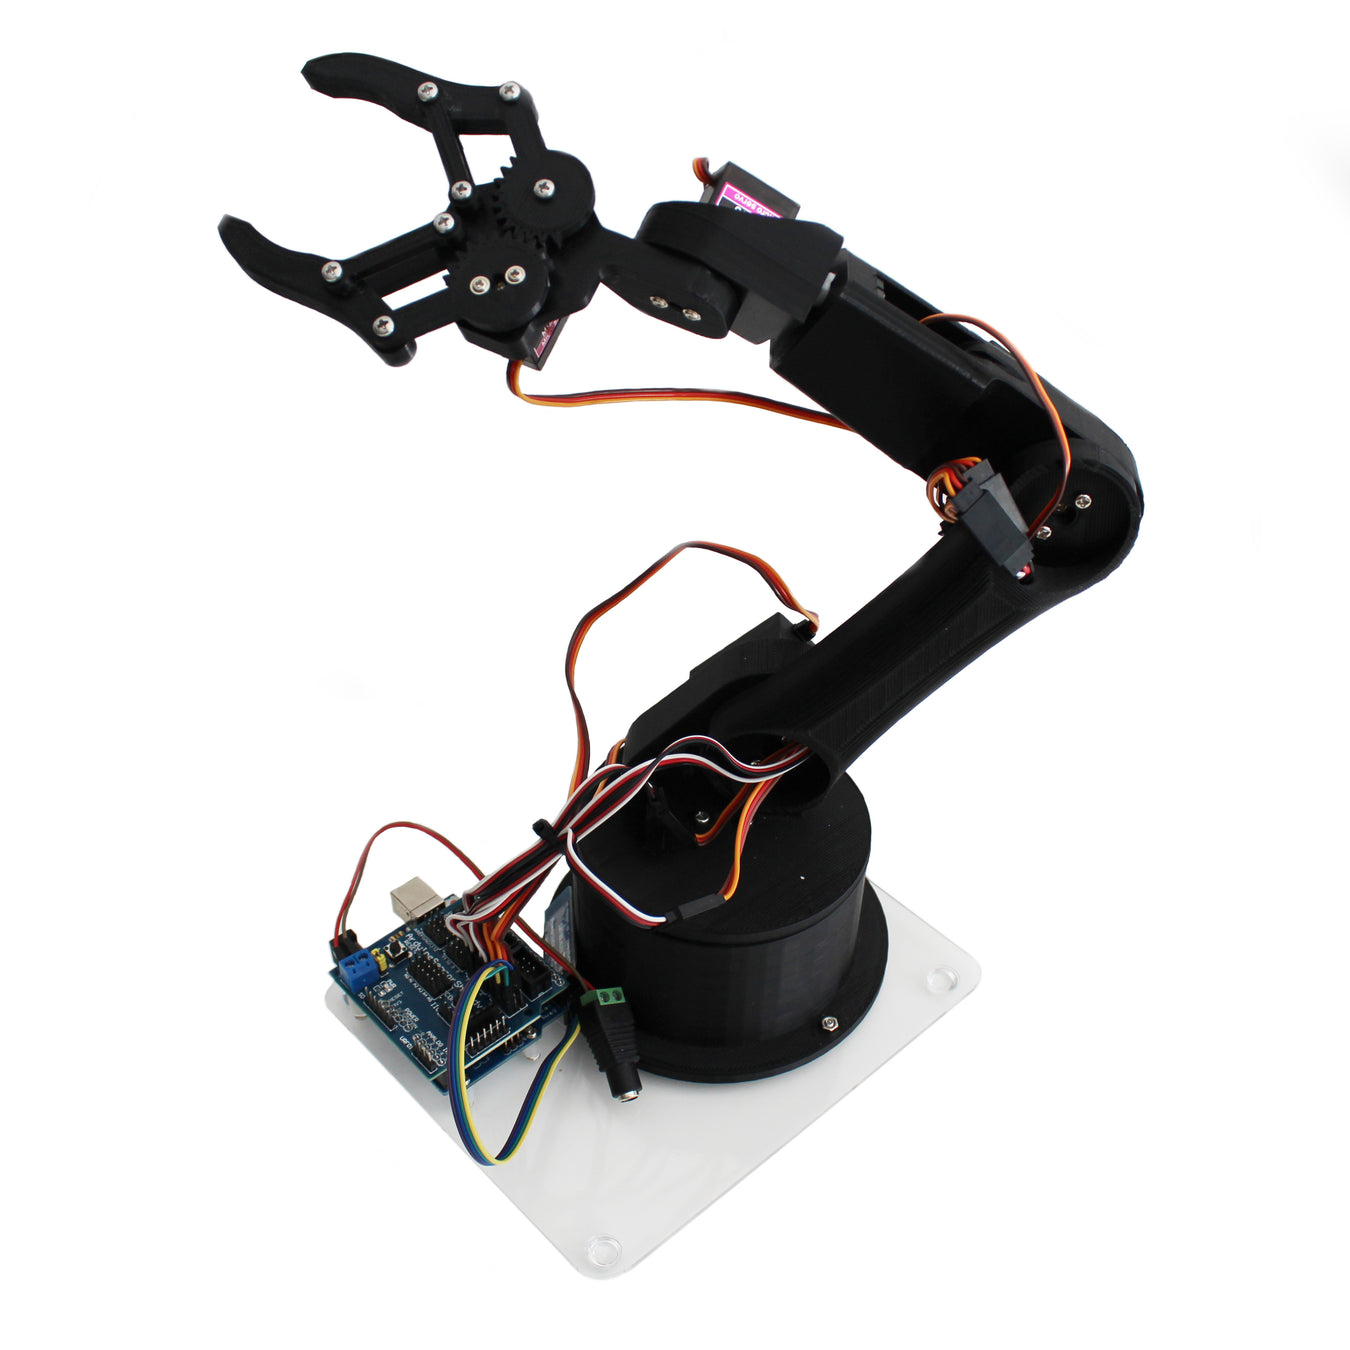 Kits robótica con envio gratis